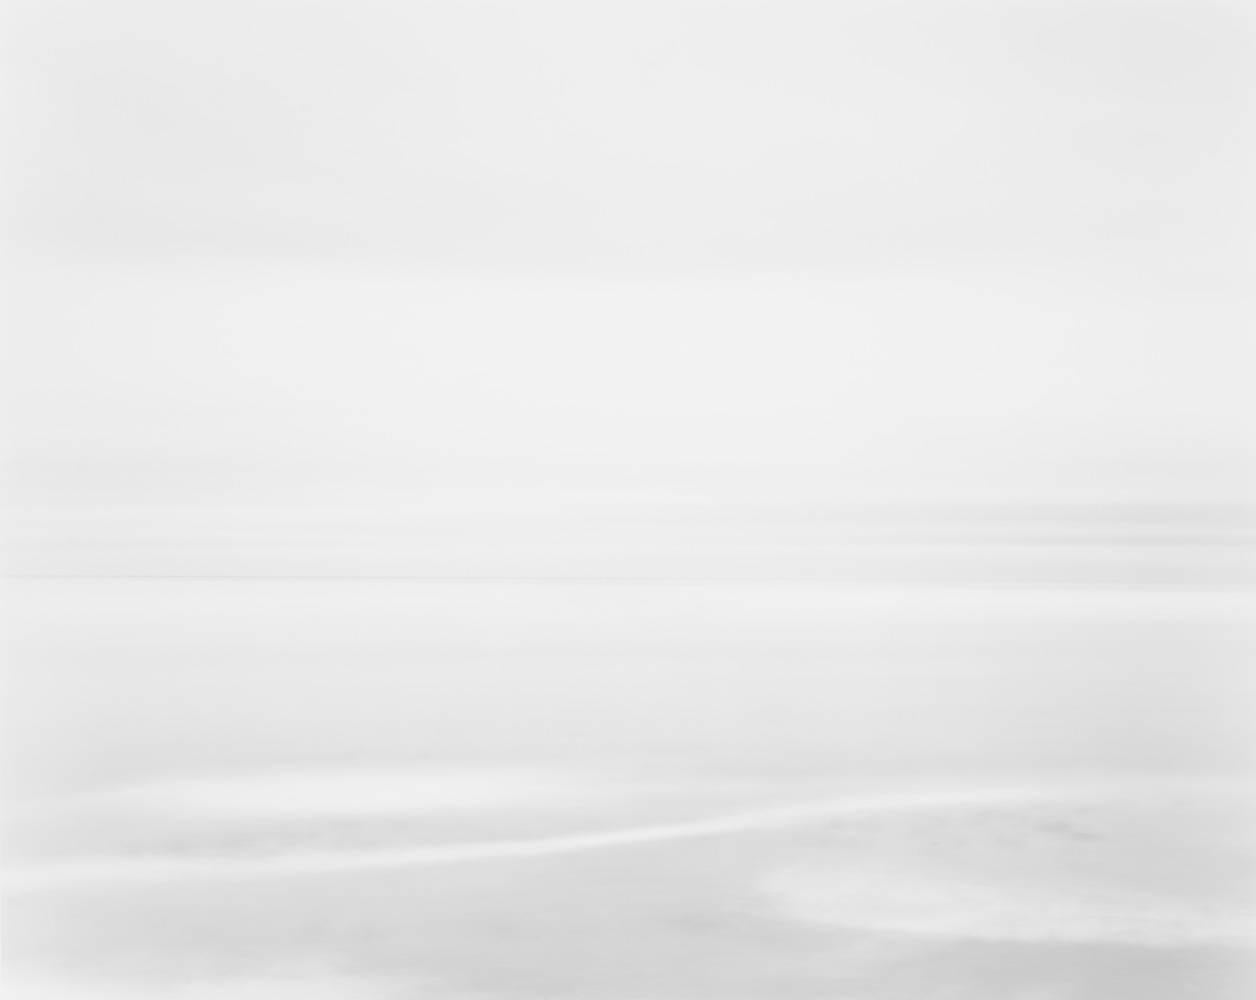 Chip Hooper Abstract Photograph - Mendocino Headlands, Pacific Ocean